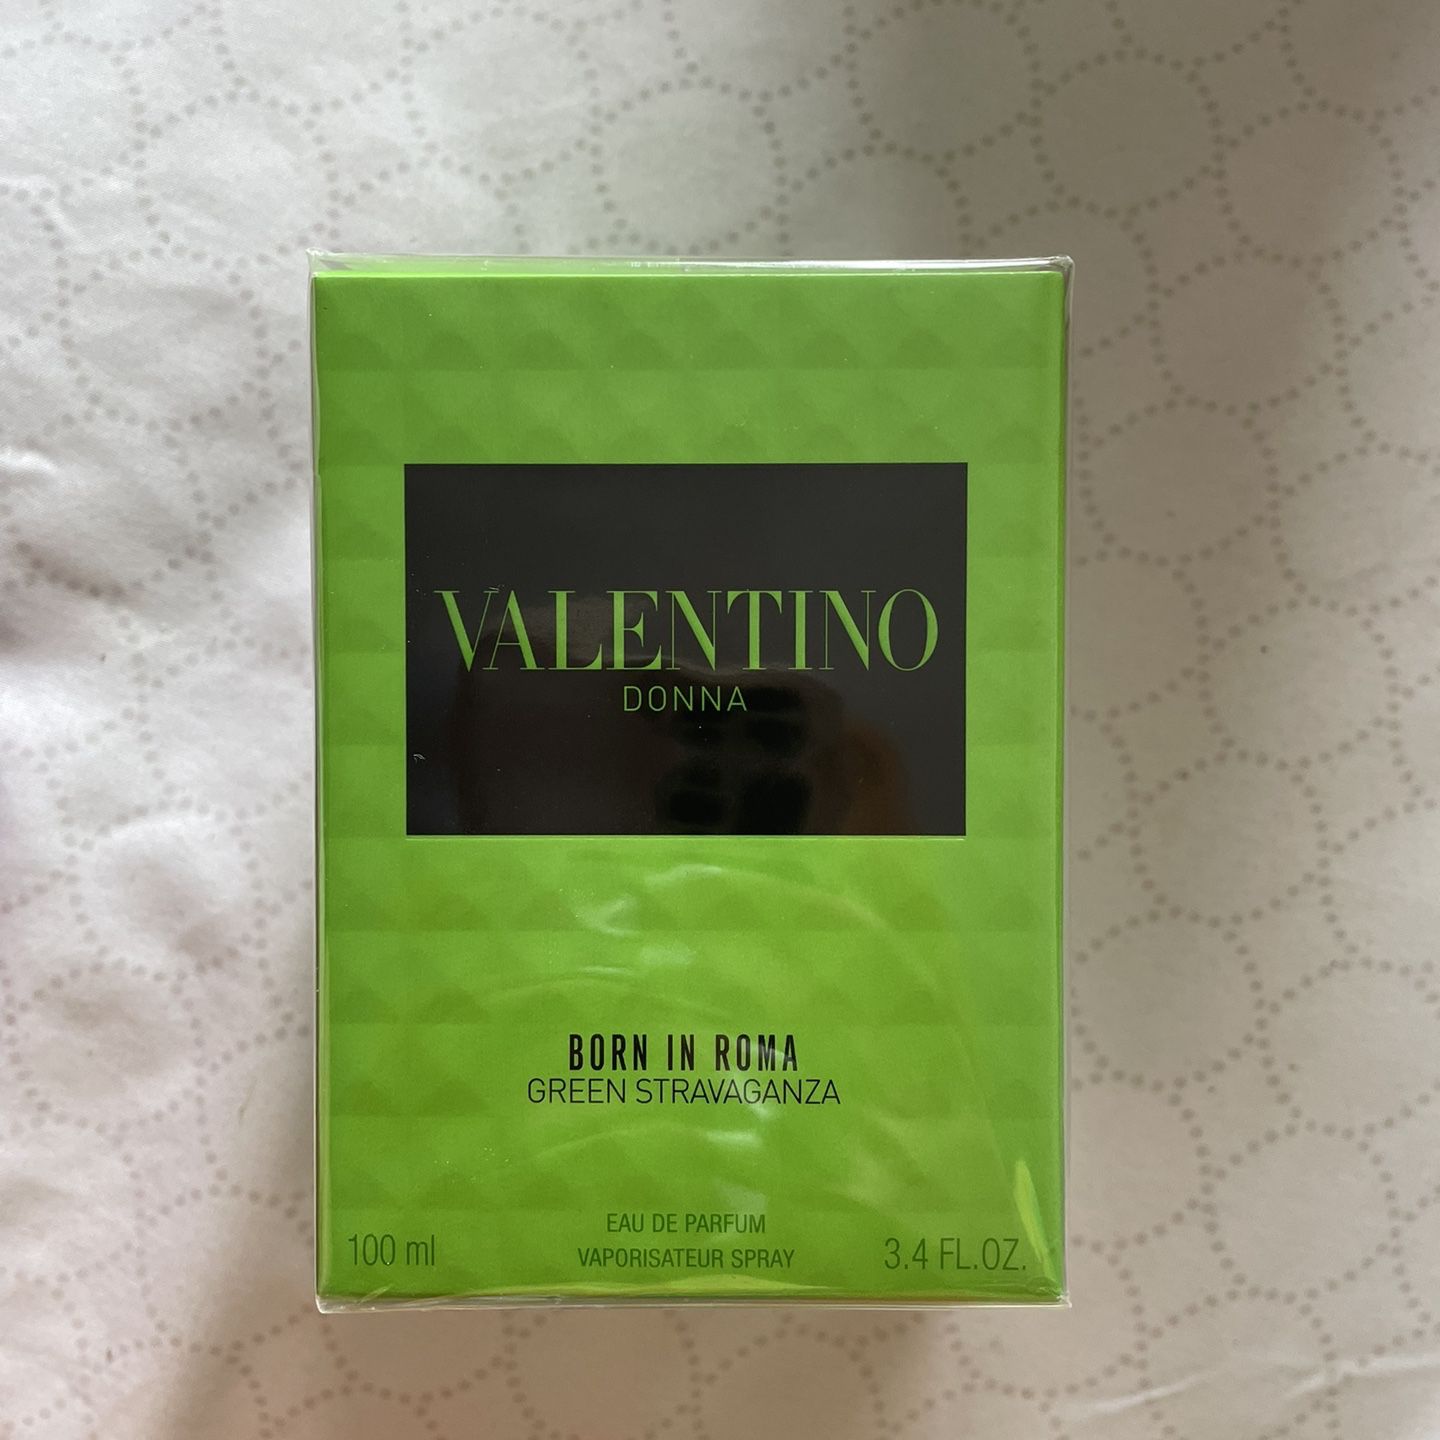 Valentino 3.4Oz- Donna Born in Roma Green Stravaganza Eau de Parfum